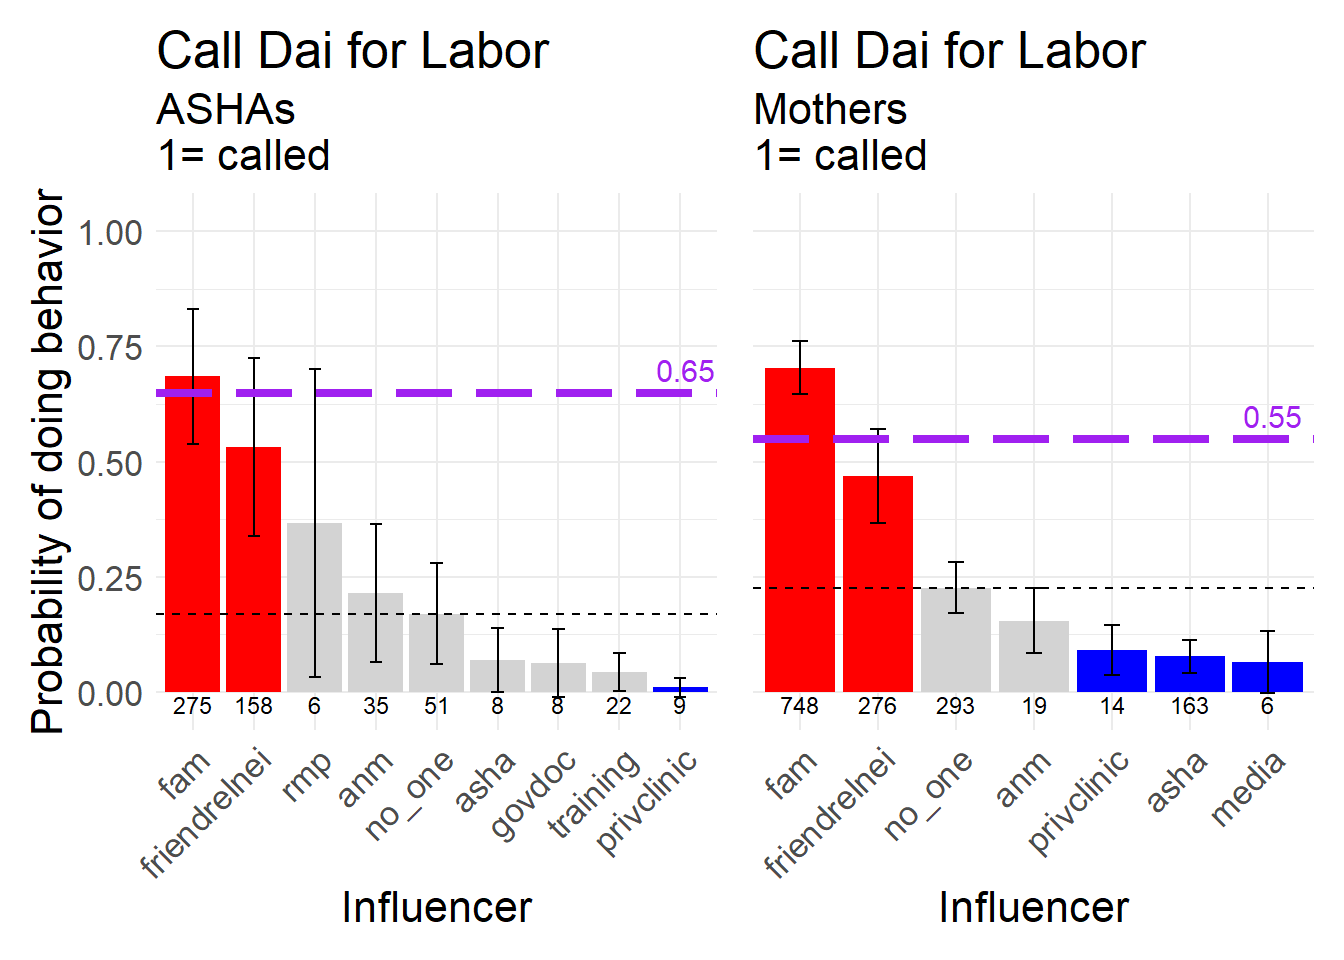 Calling the dai when labor started, a neutral behavior, 1 = called the dai.